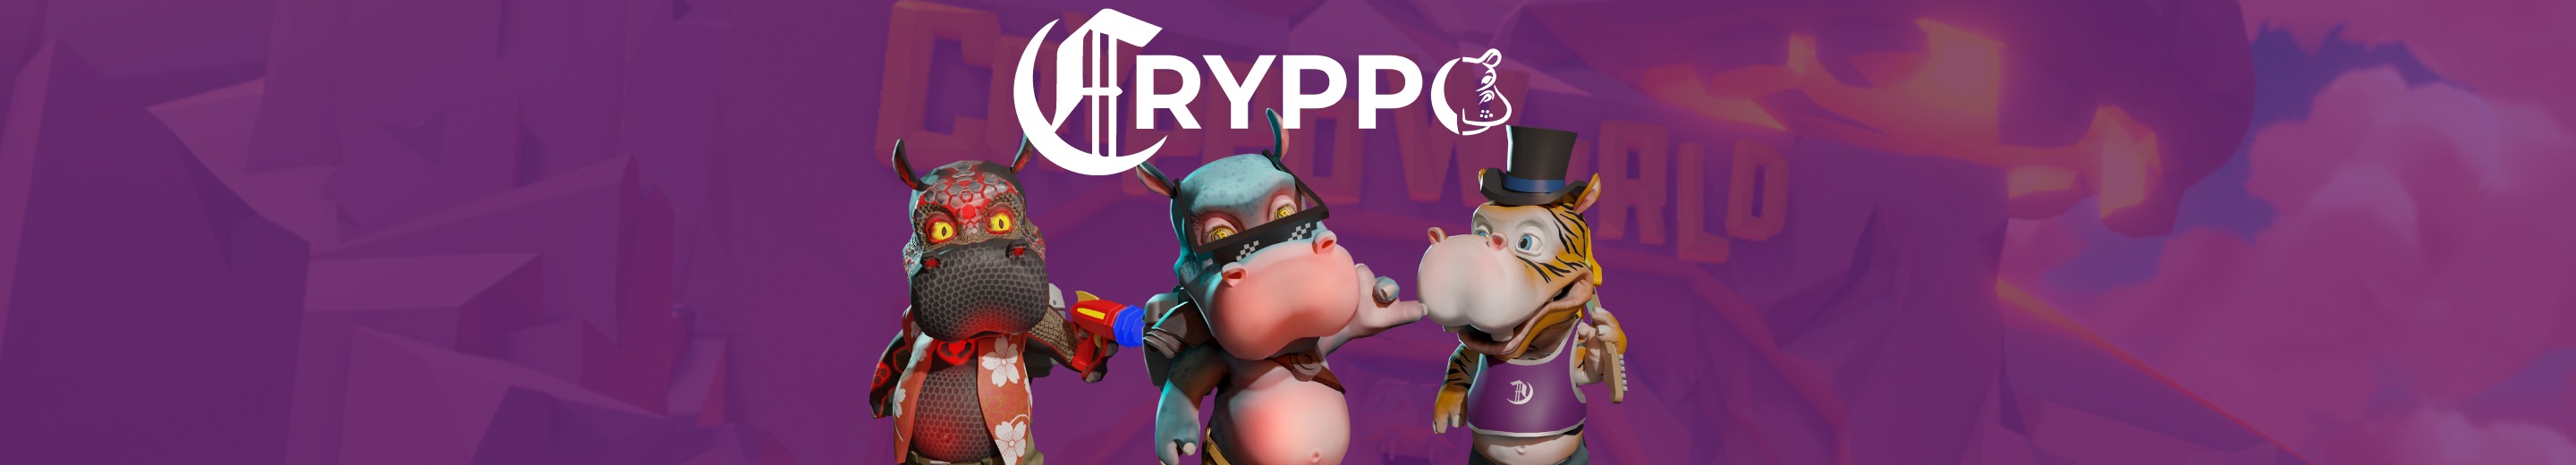 CRYPPO-GENESIS banner